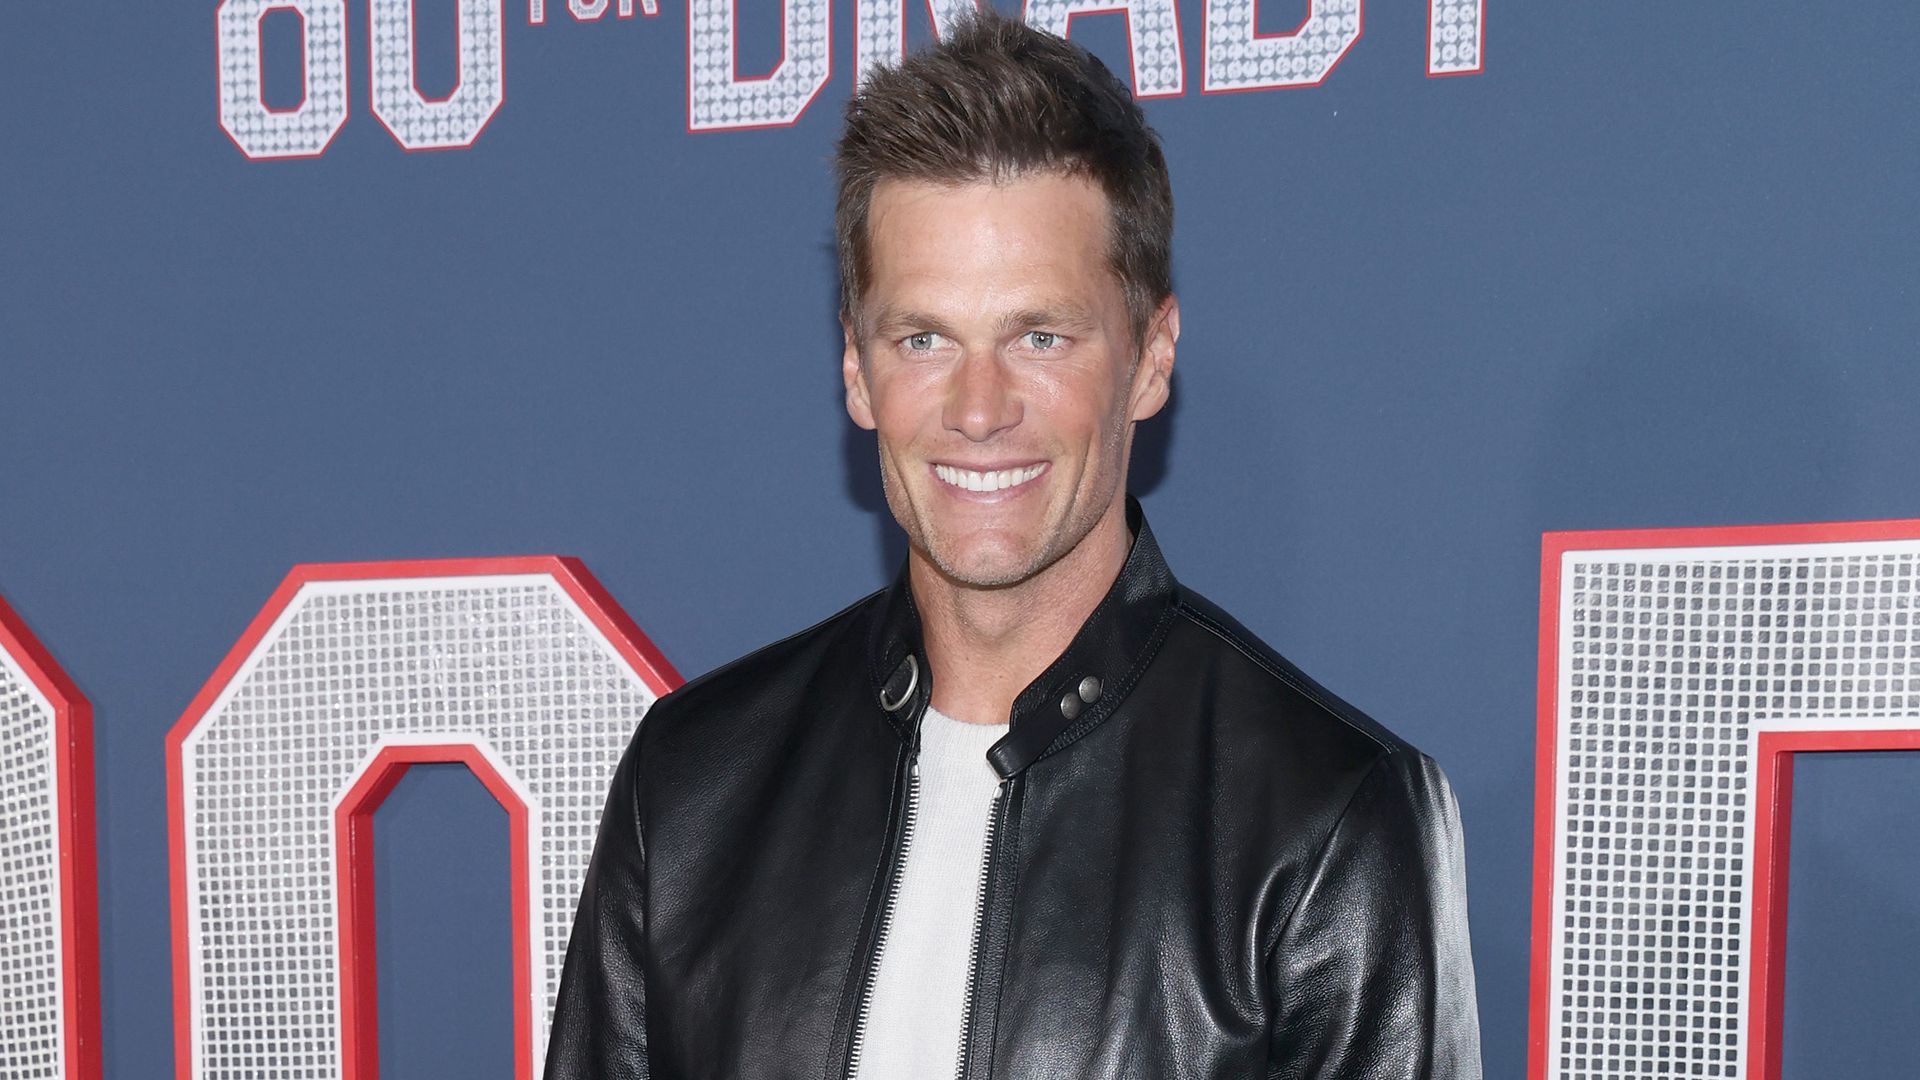 Tom Brady smiling at a red carpet event